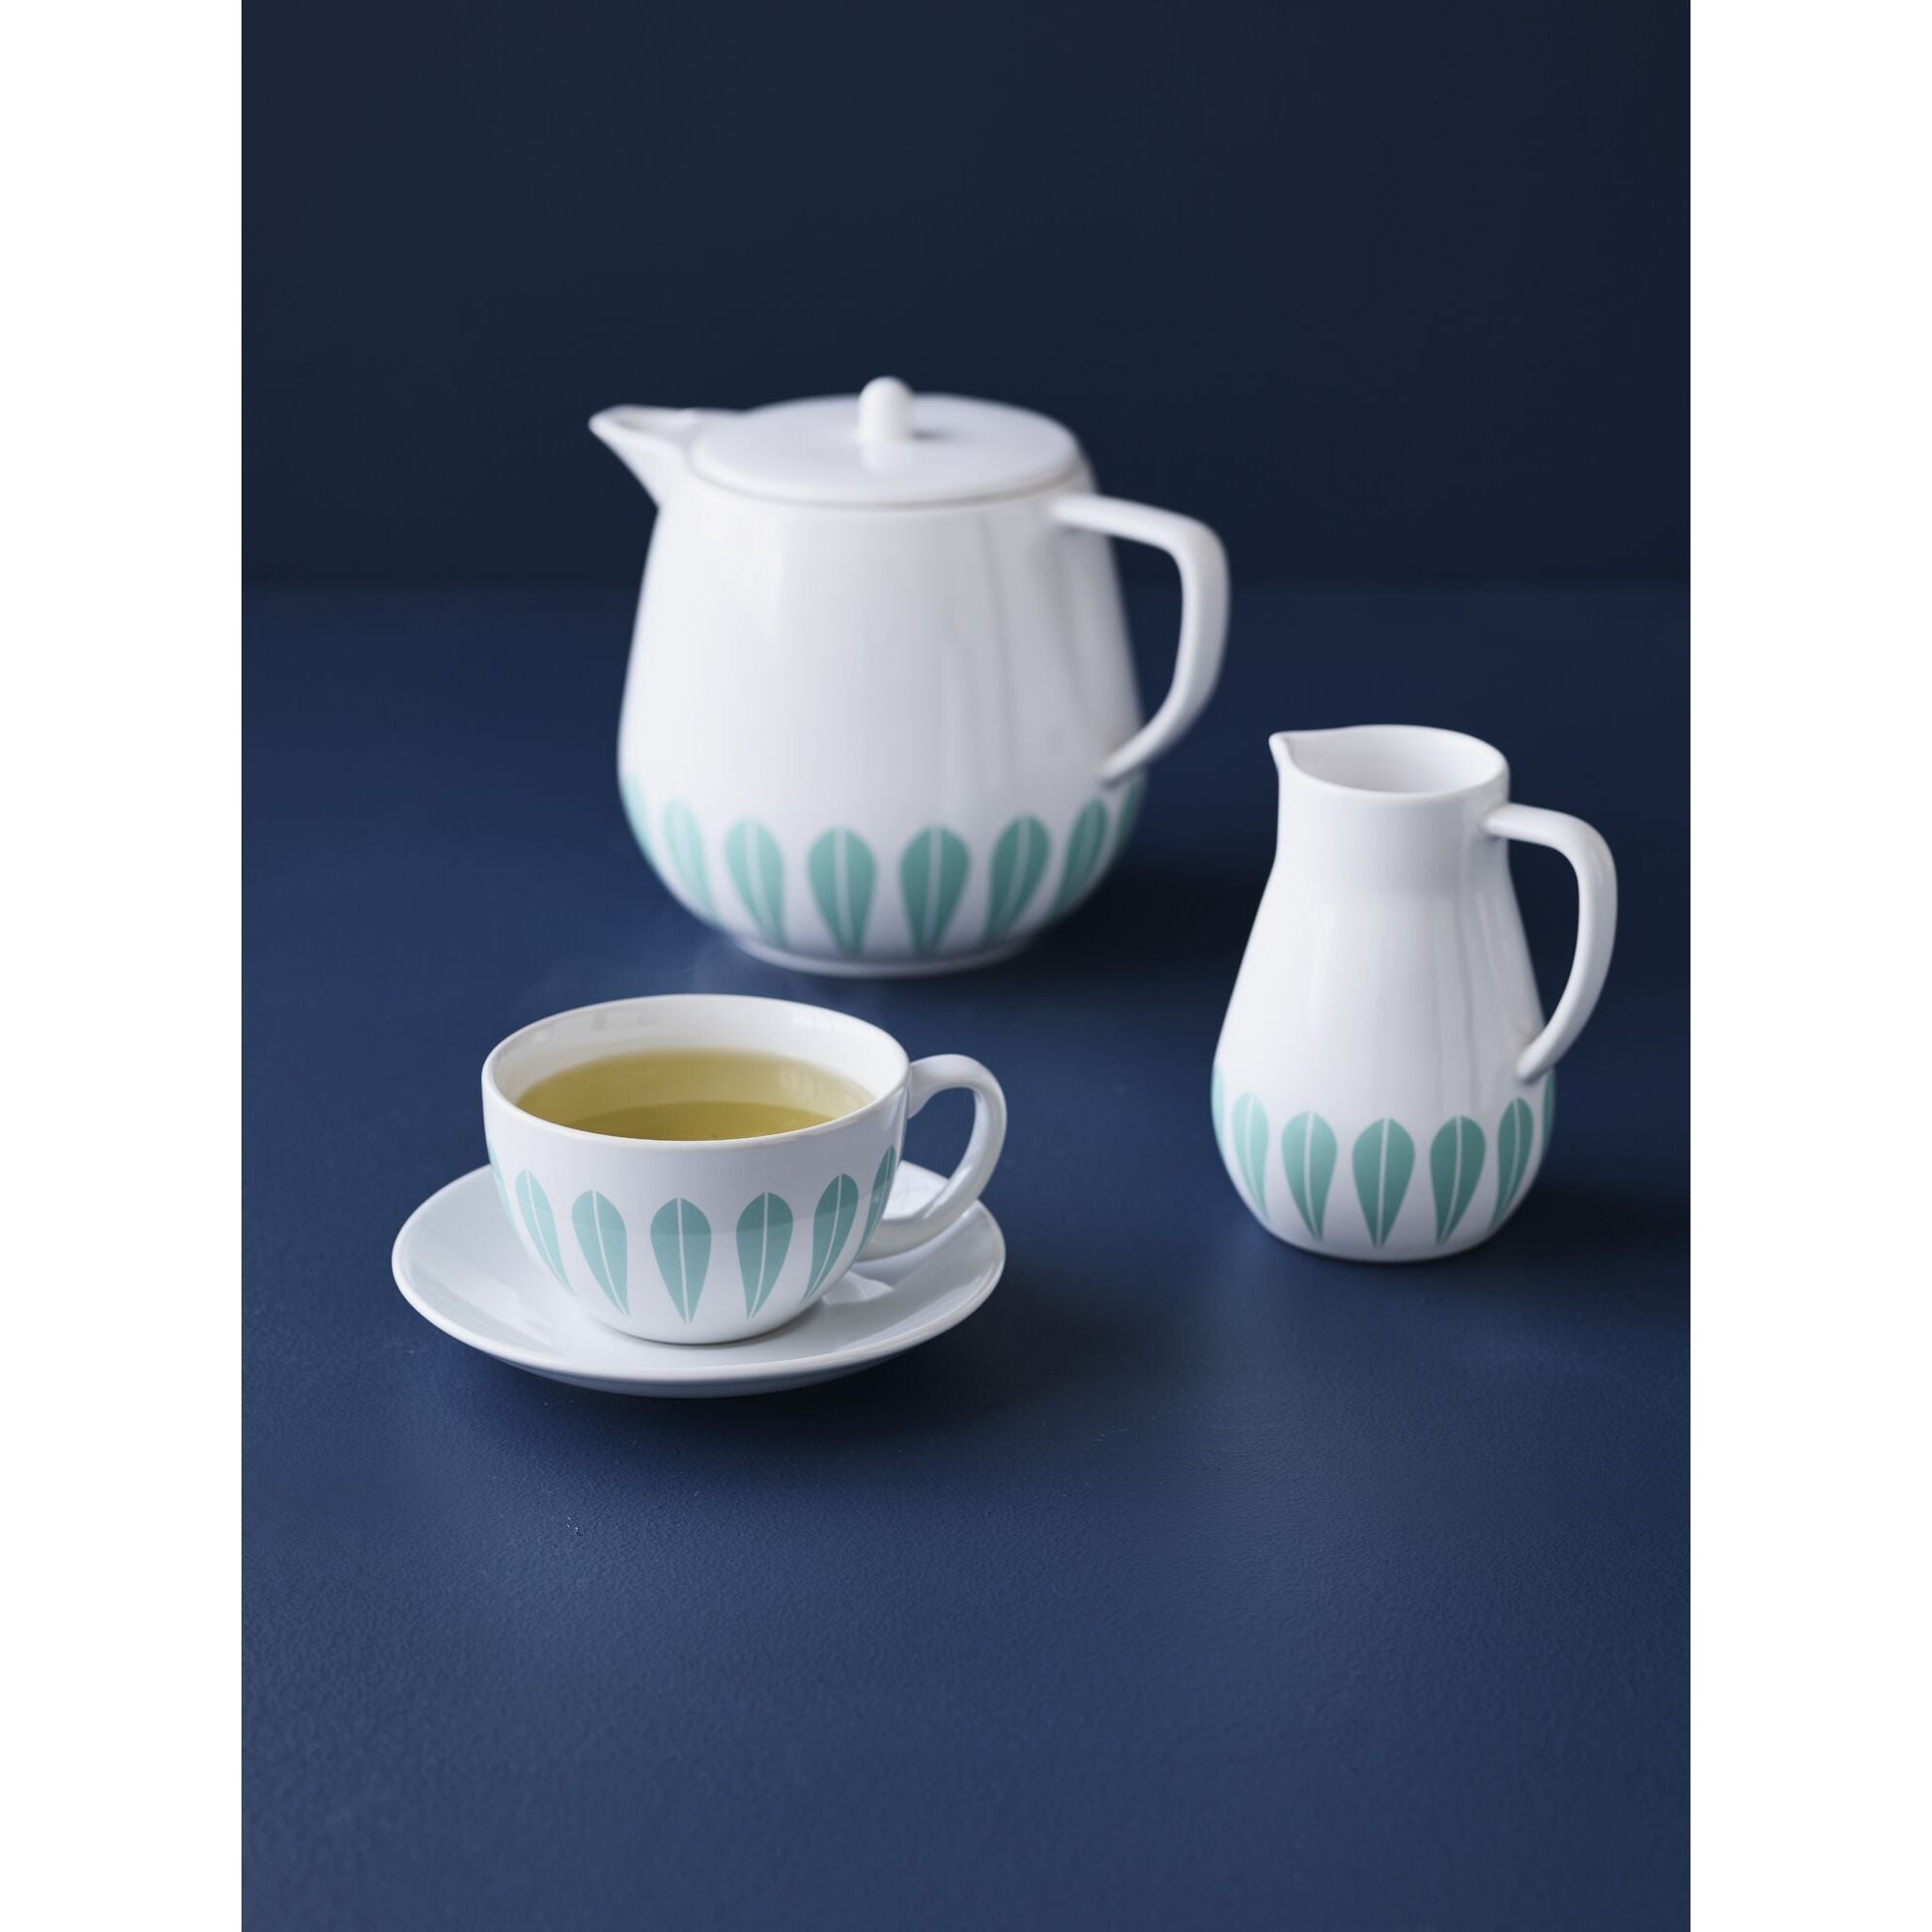 Lucie Kaas Arne Clausen Collection Teapot, Dark Blue